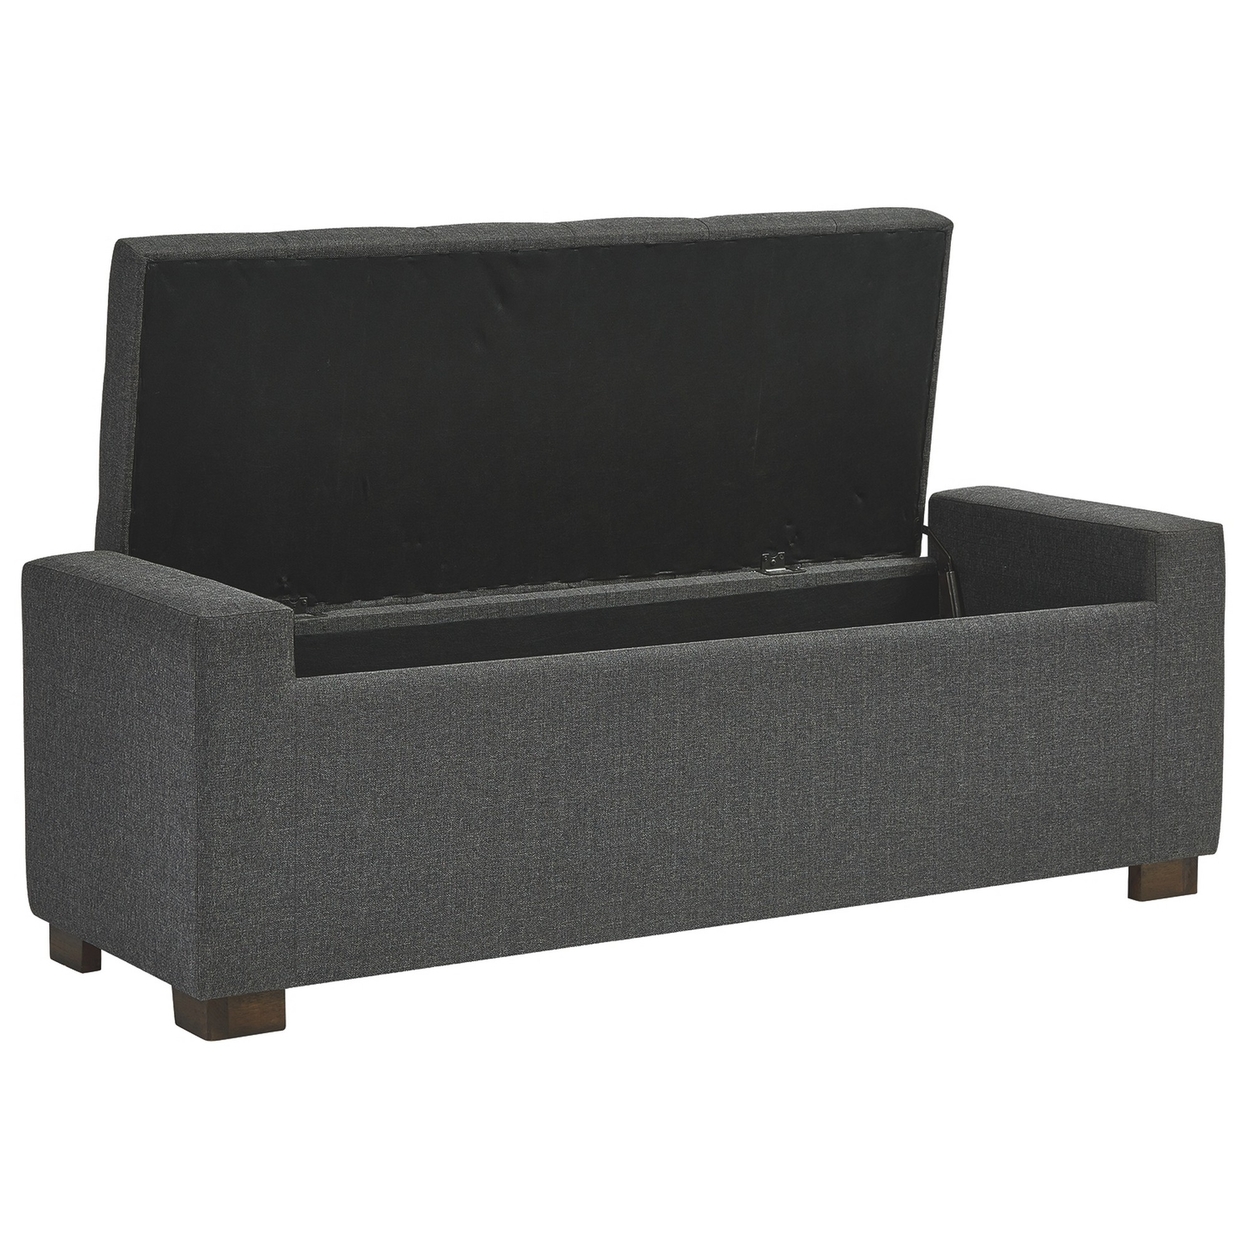 Fabric Tufted Seat Storage Bench With Block Feet, Dark Gray- Saltoro Sherpi